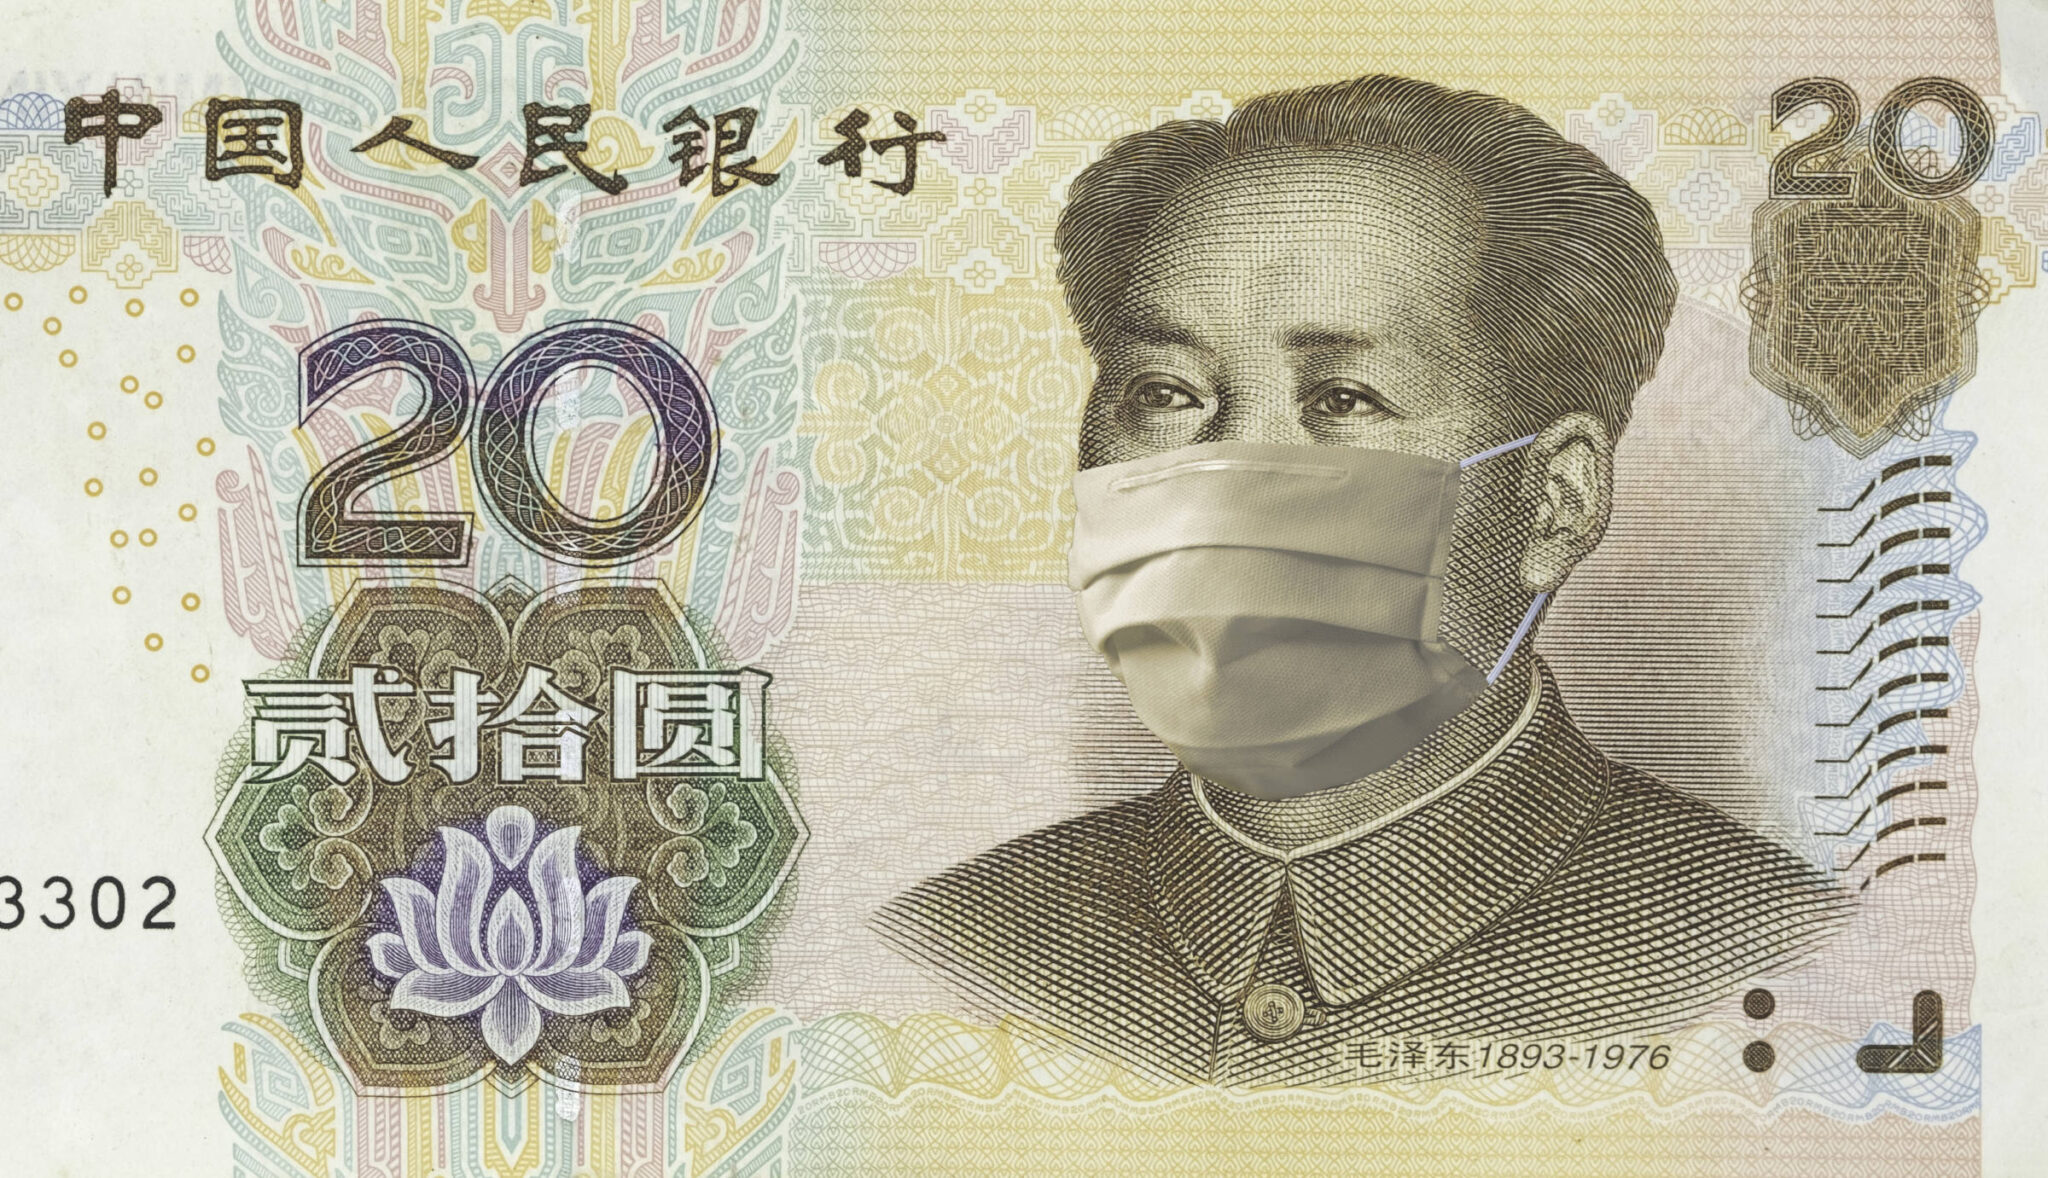 COVID-19 coronavirus in China, renminbi yuan money bill with face mask. COVID global stock market. World economy hit by corona virus outbreak. Financial crisis and coronavirus pandemic concept.